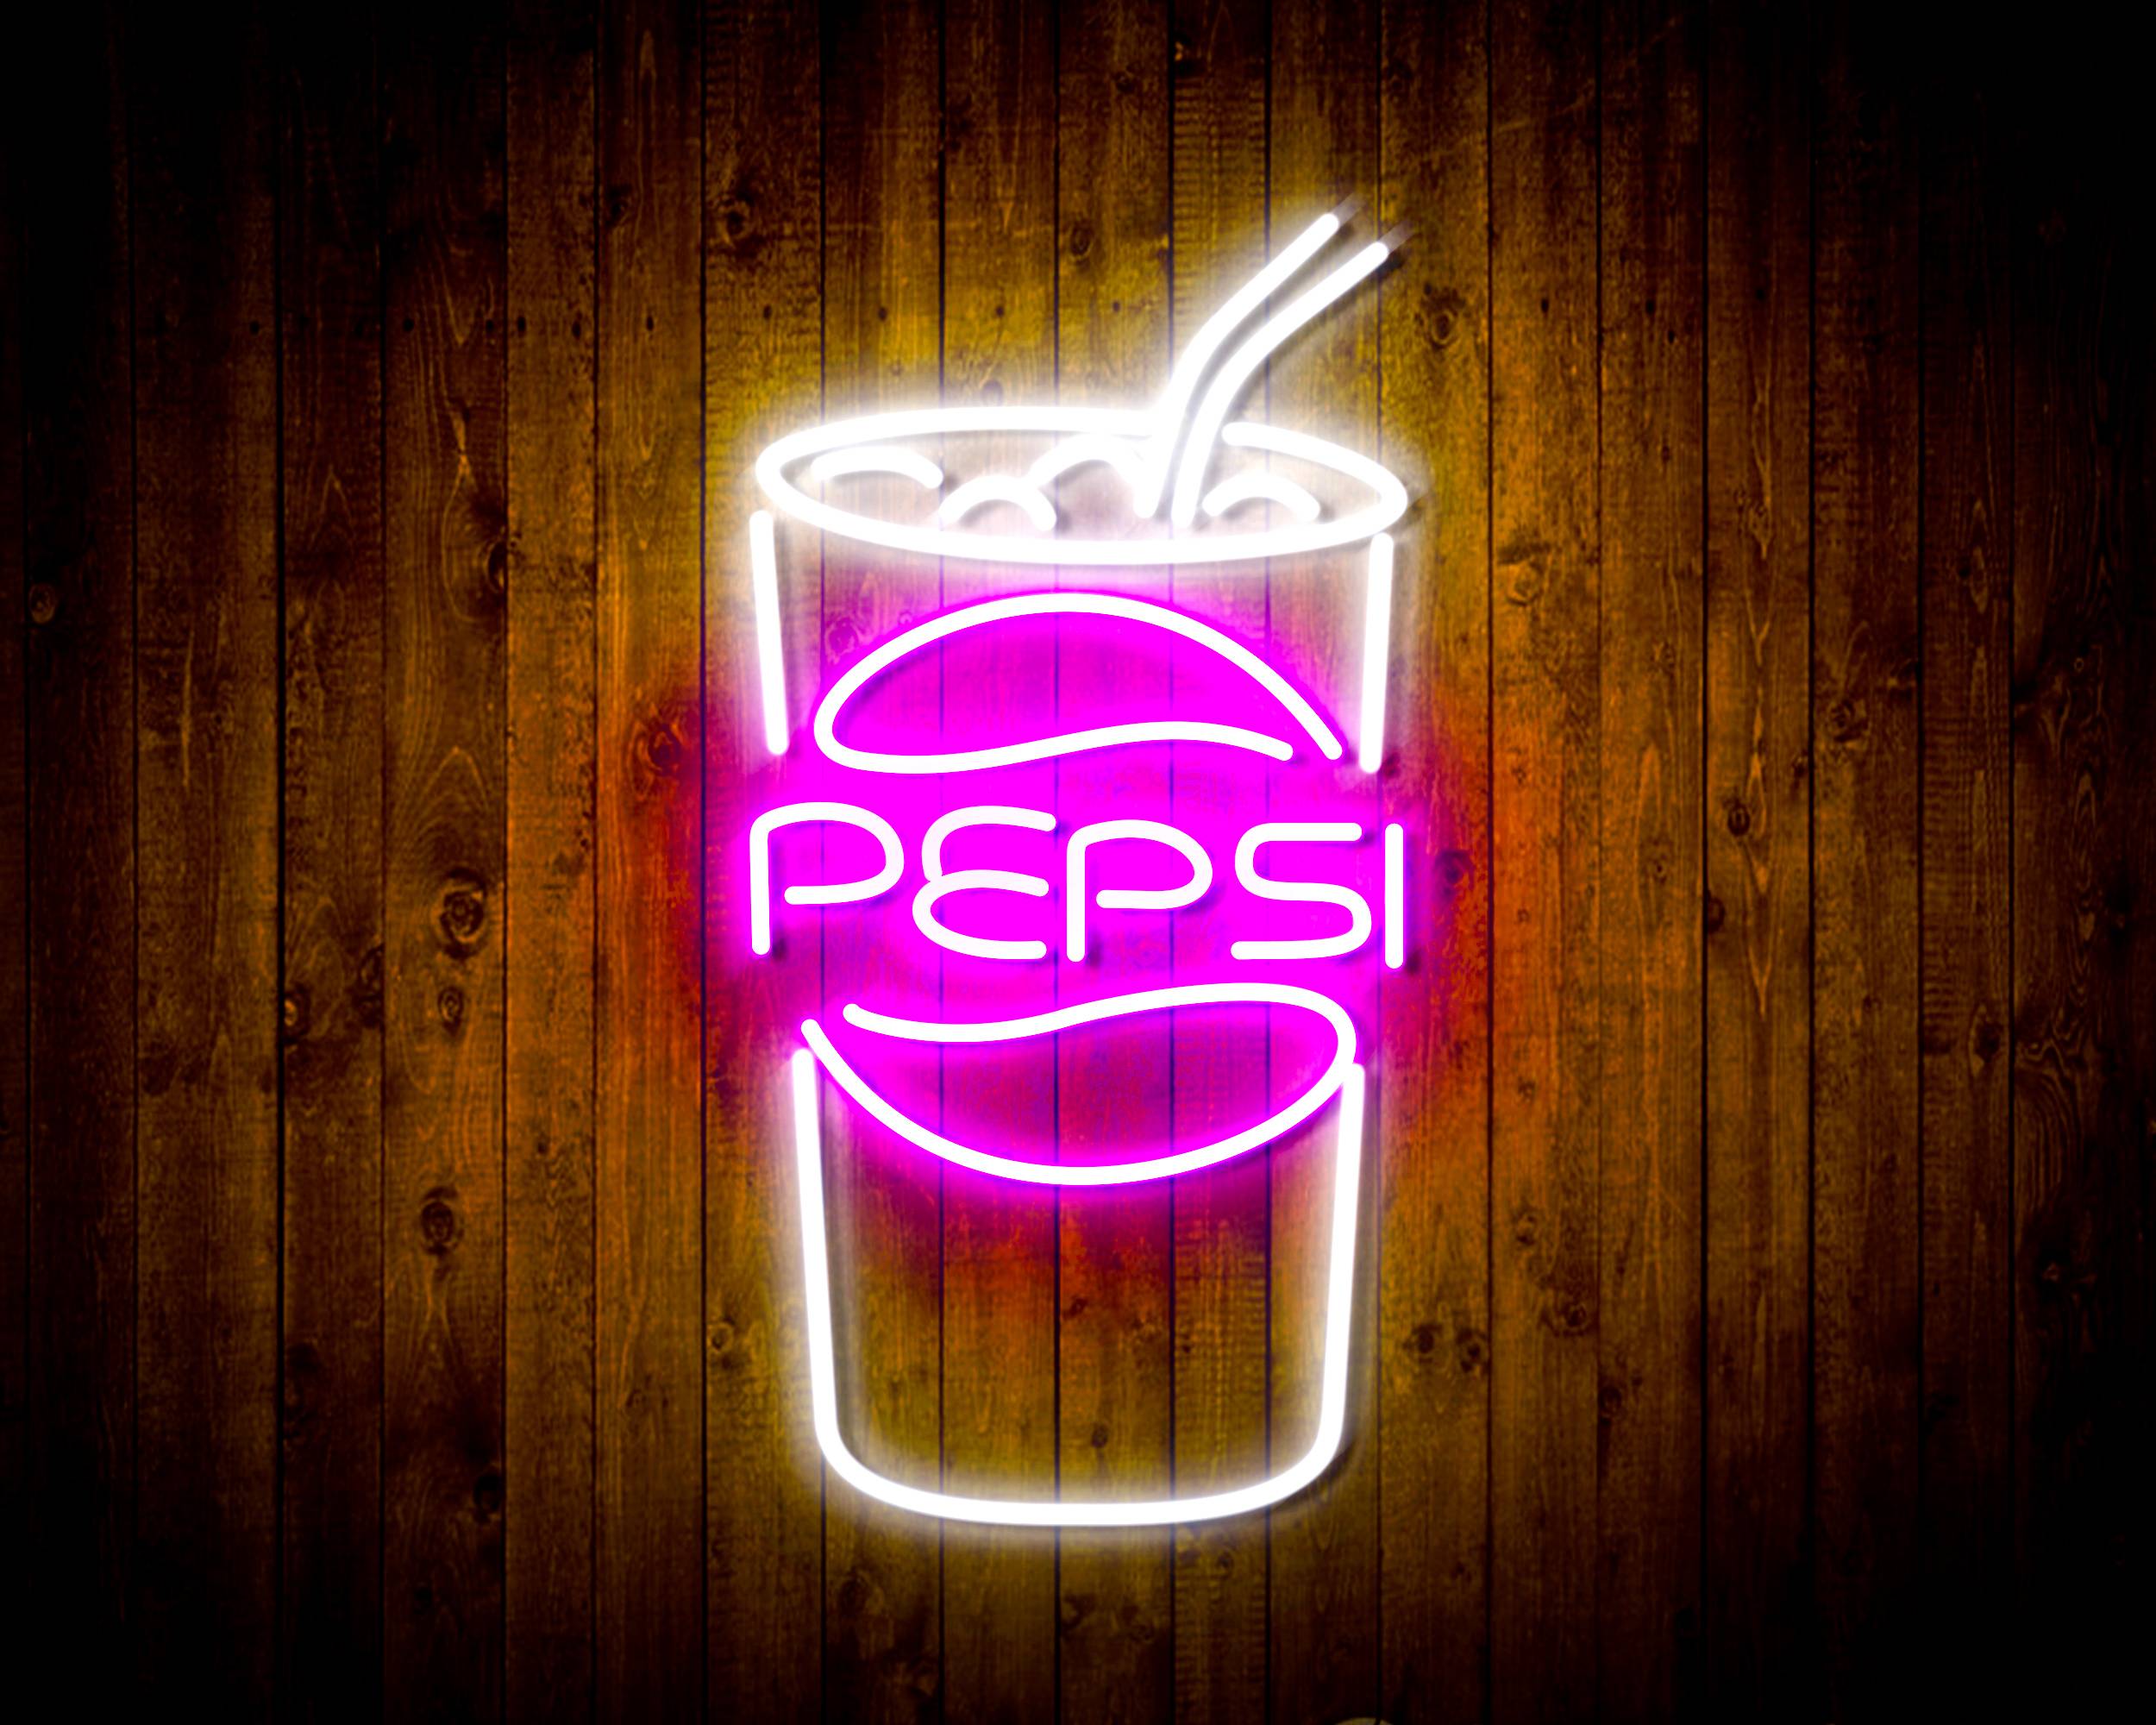 Pepsi 3 Handmade Neon Flex LED Sign